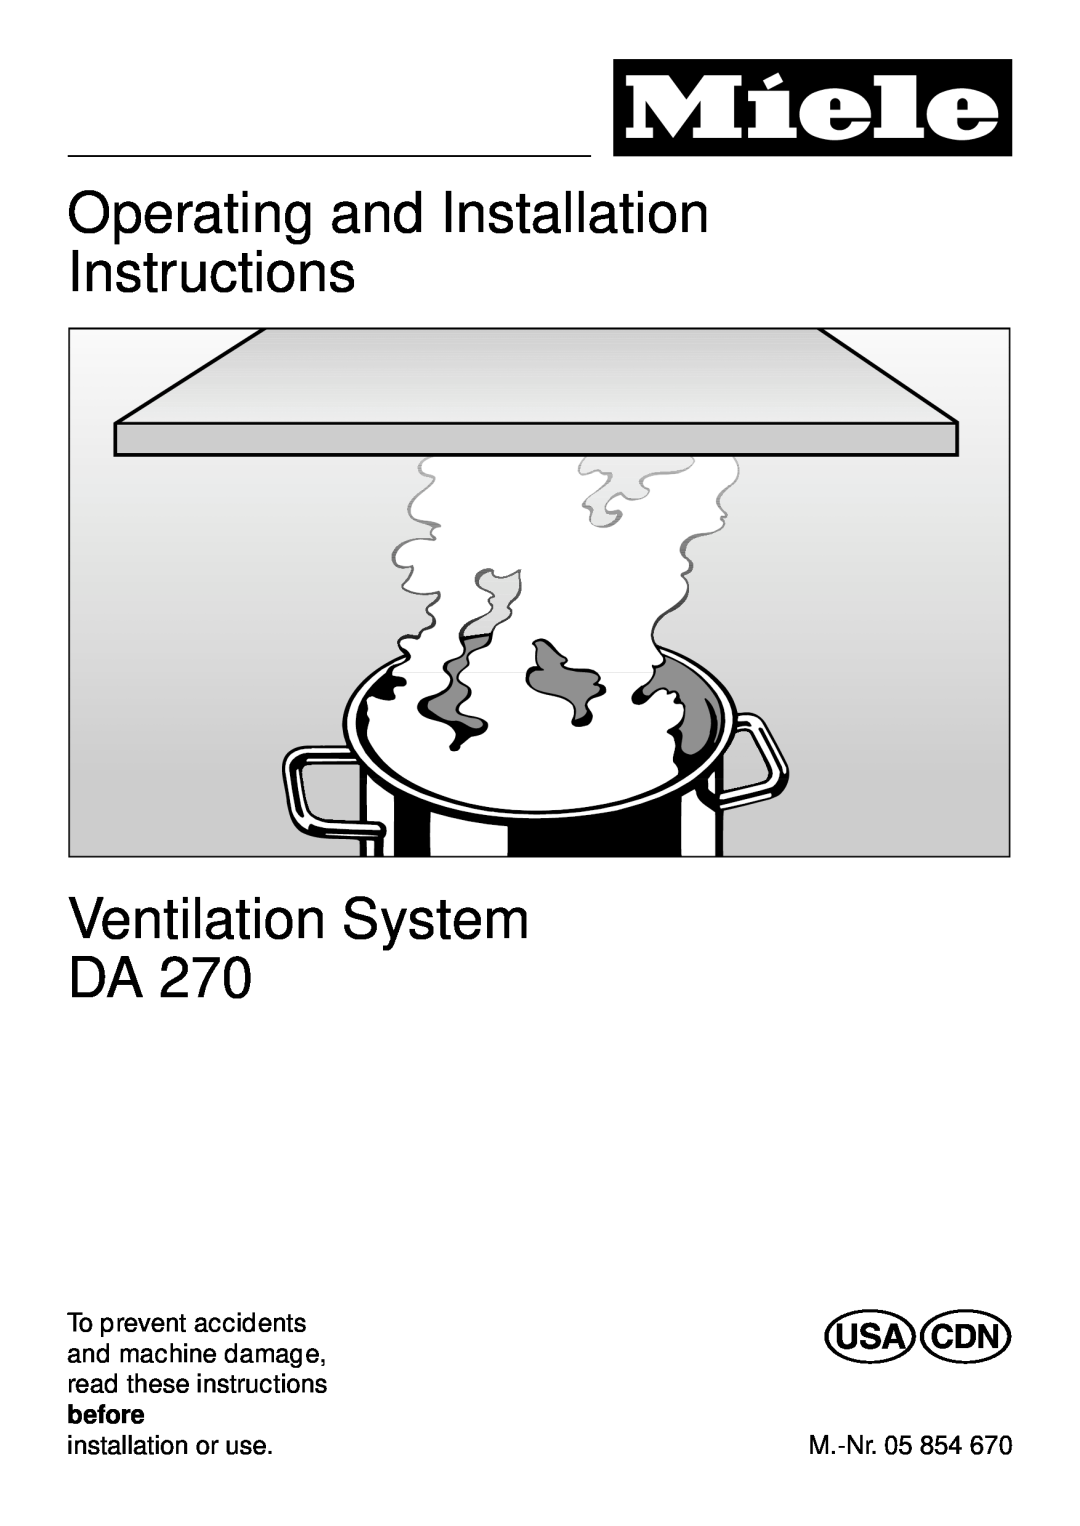 Miele DA270 installation instructions Ventilation System DA, Operating and Installation Instructions 